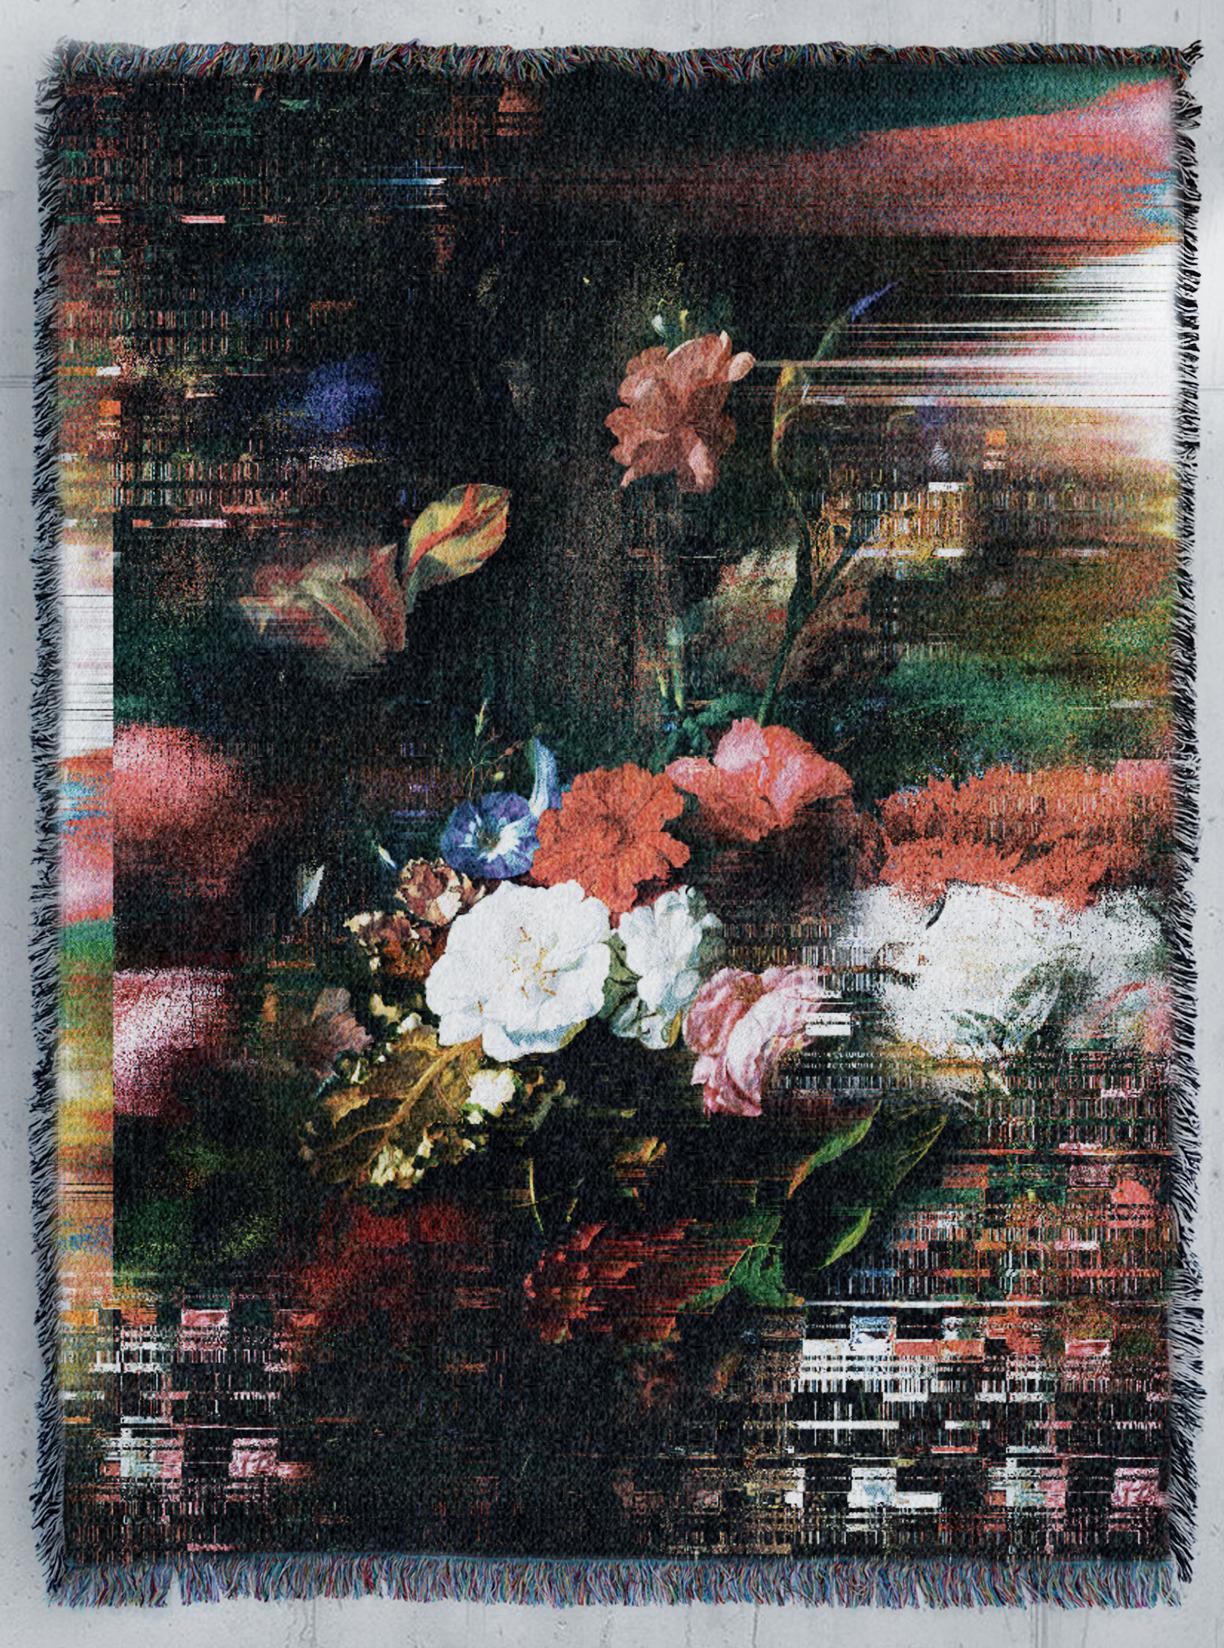 Memories of “Vase of flowers” by Rachel Ruysch by Marco Salvi - Print by Unknown